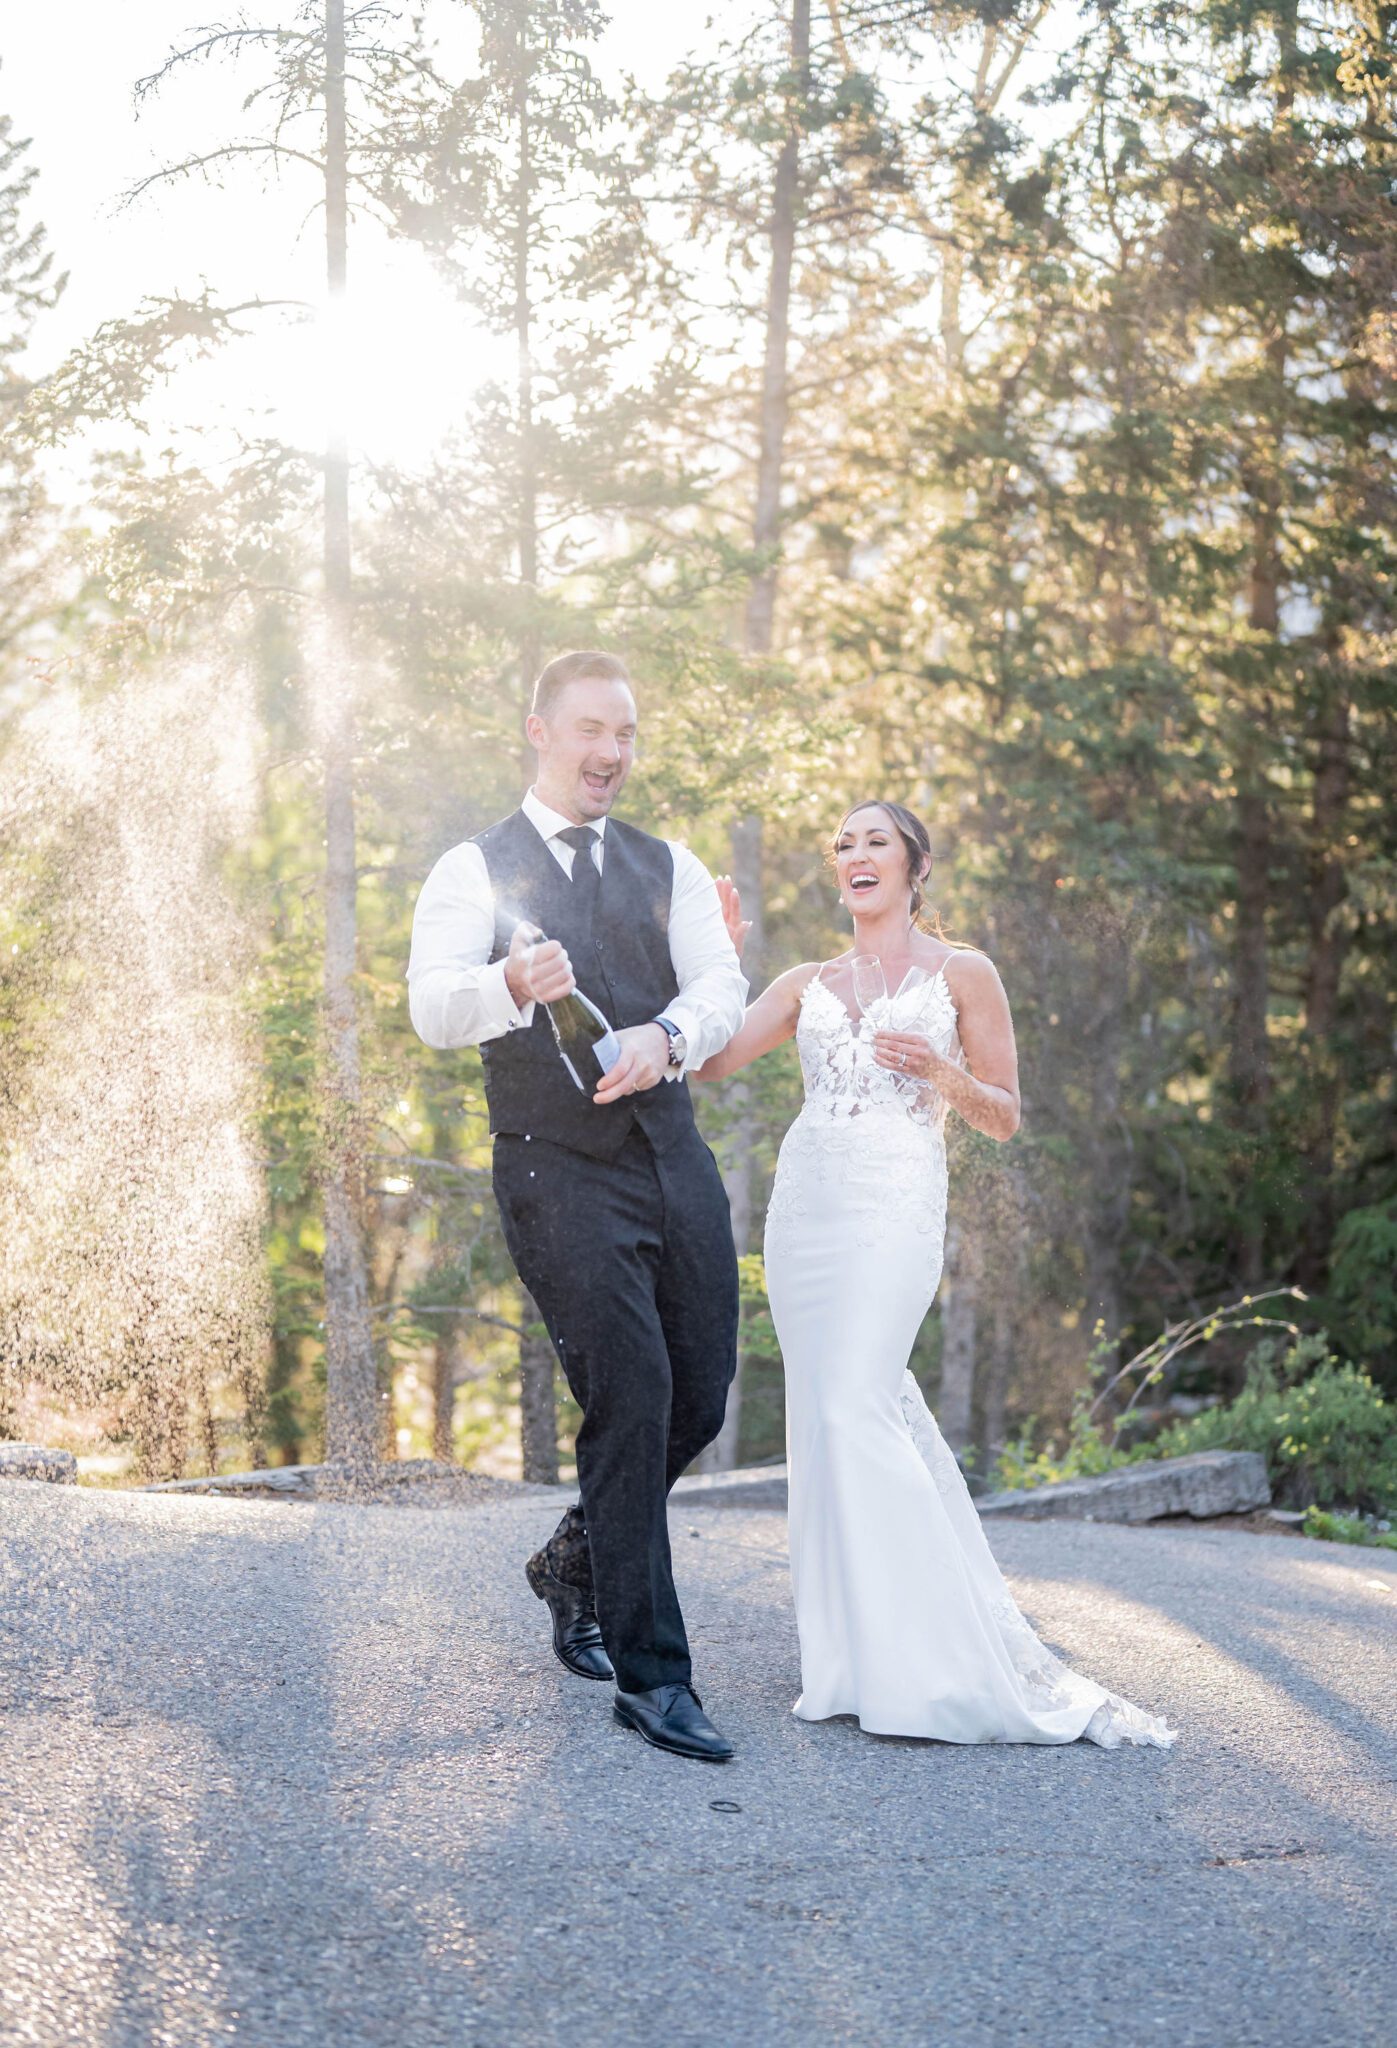 Bride and groom spraying champagne at their Banff Summer wedding, mountain wedding inspiration. 